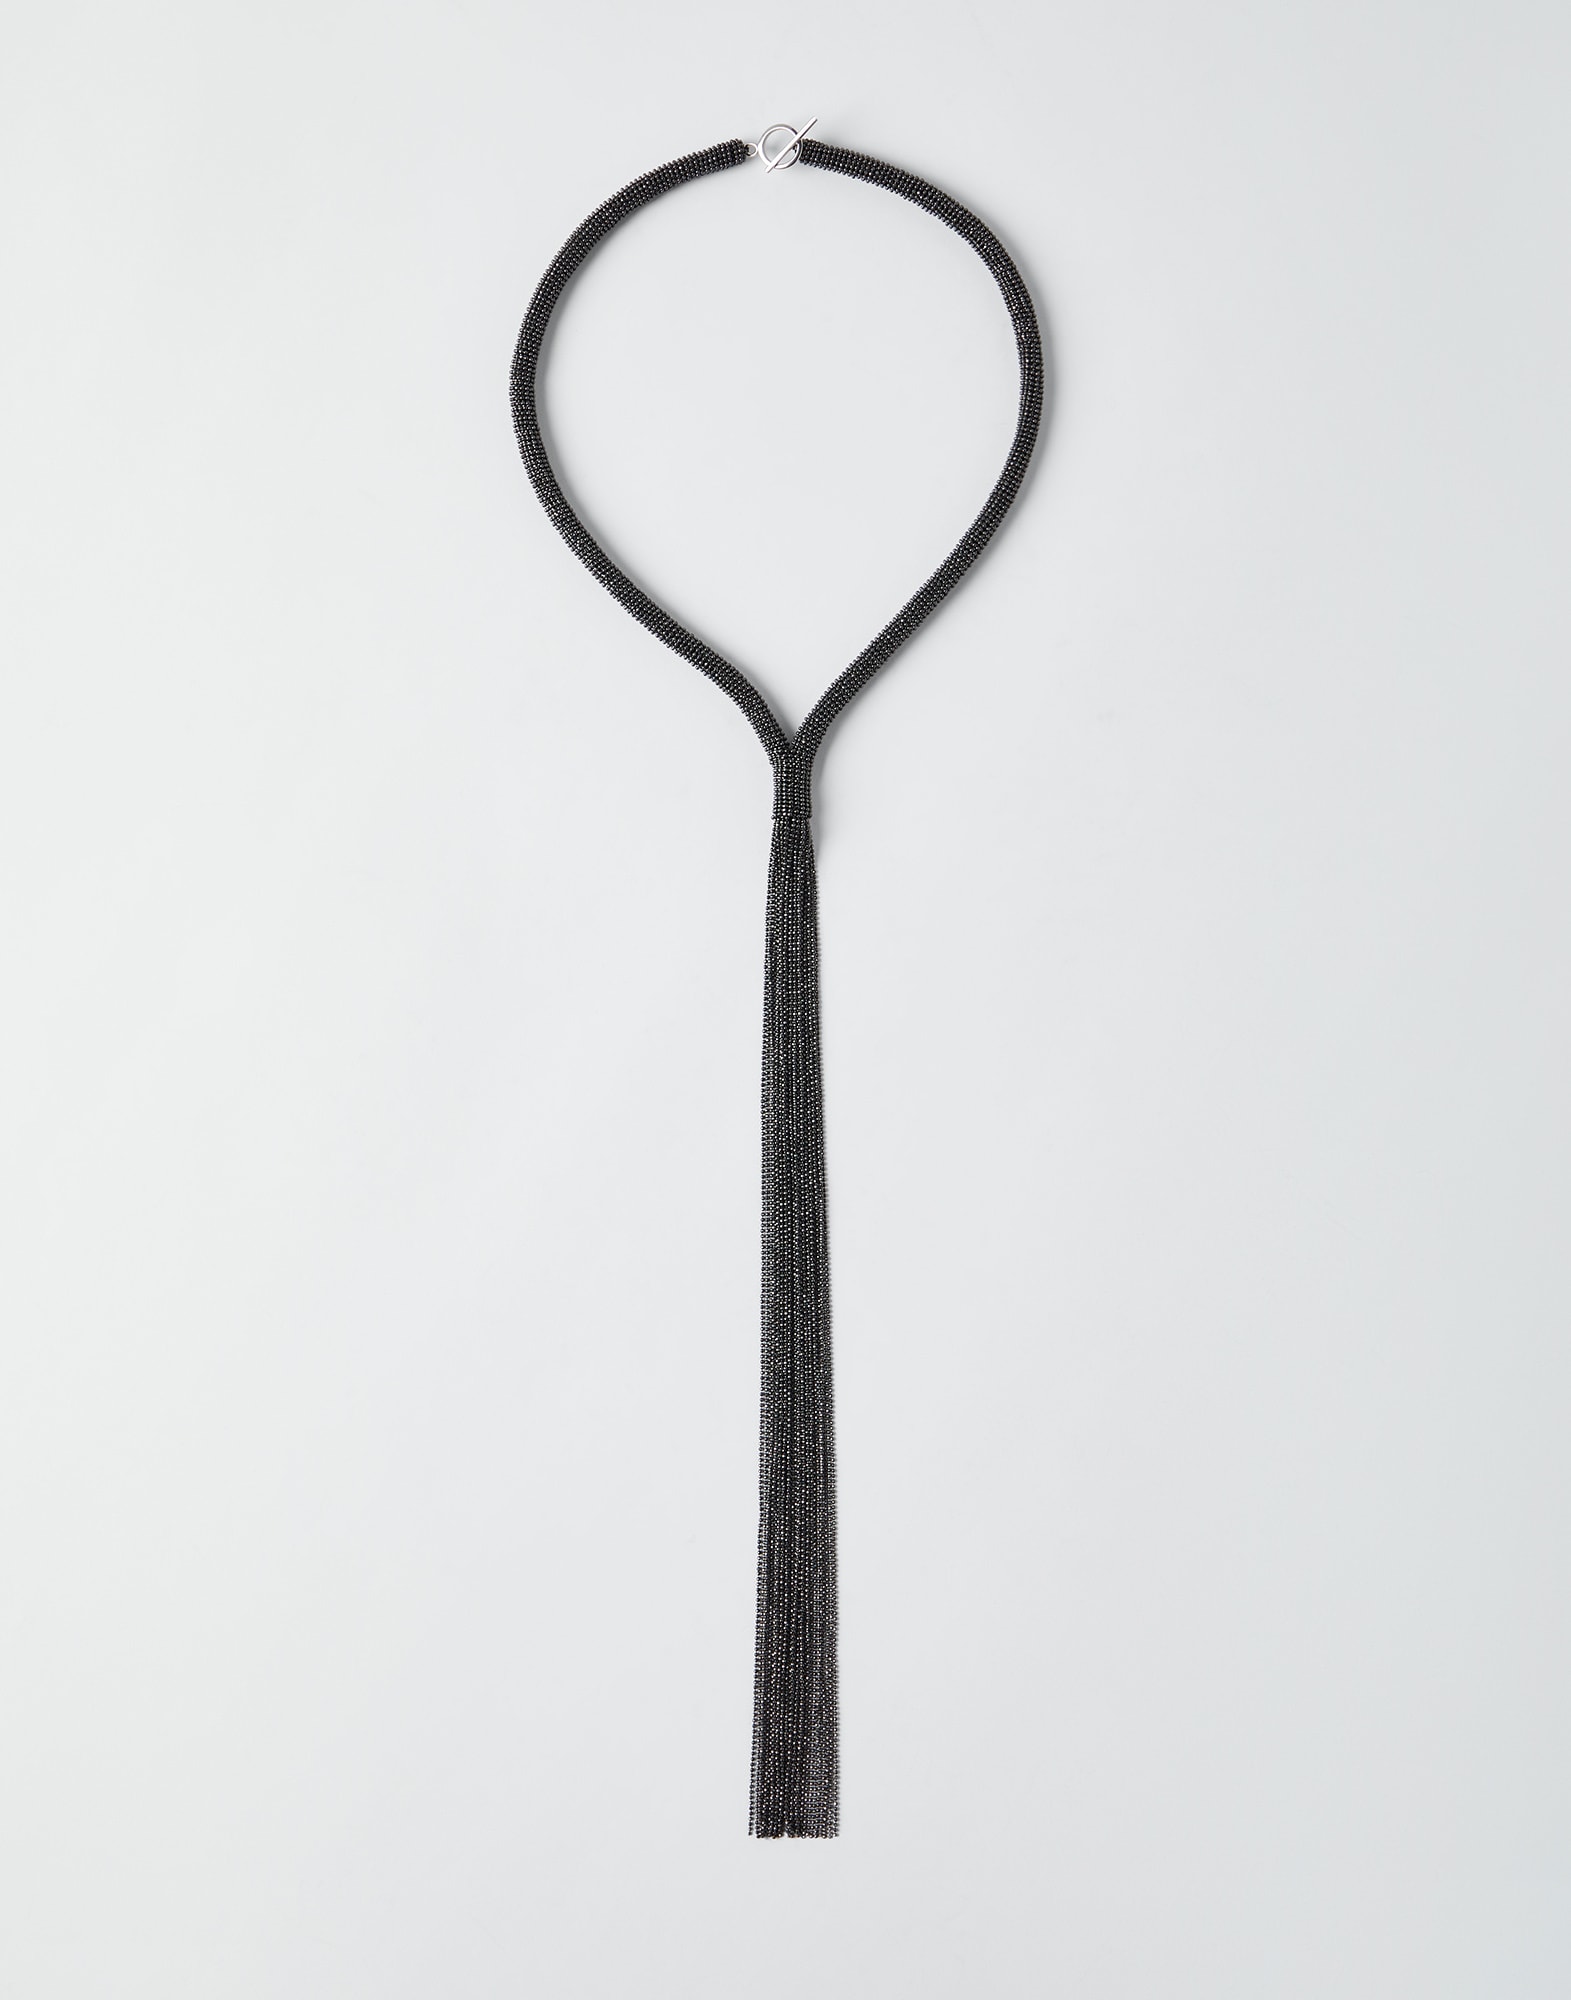 Ожерелье Tie из цепочки Мониль Чёрный Женщина - Brunello Cucinelli